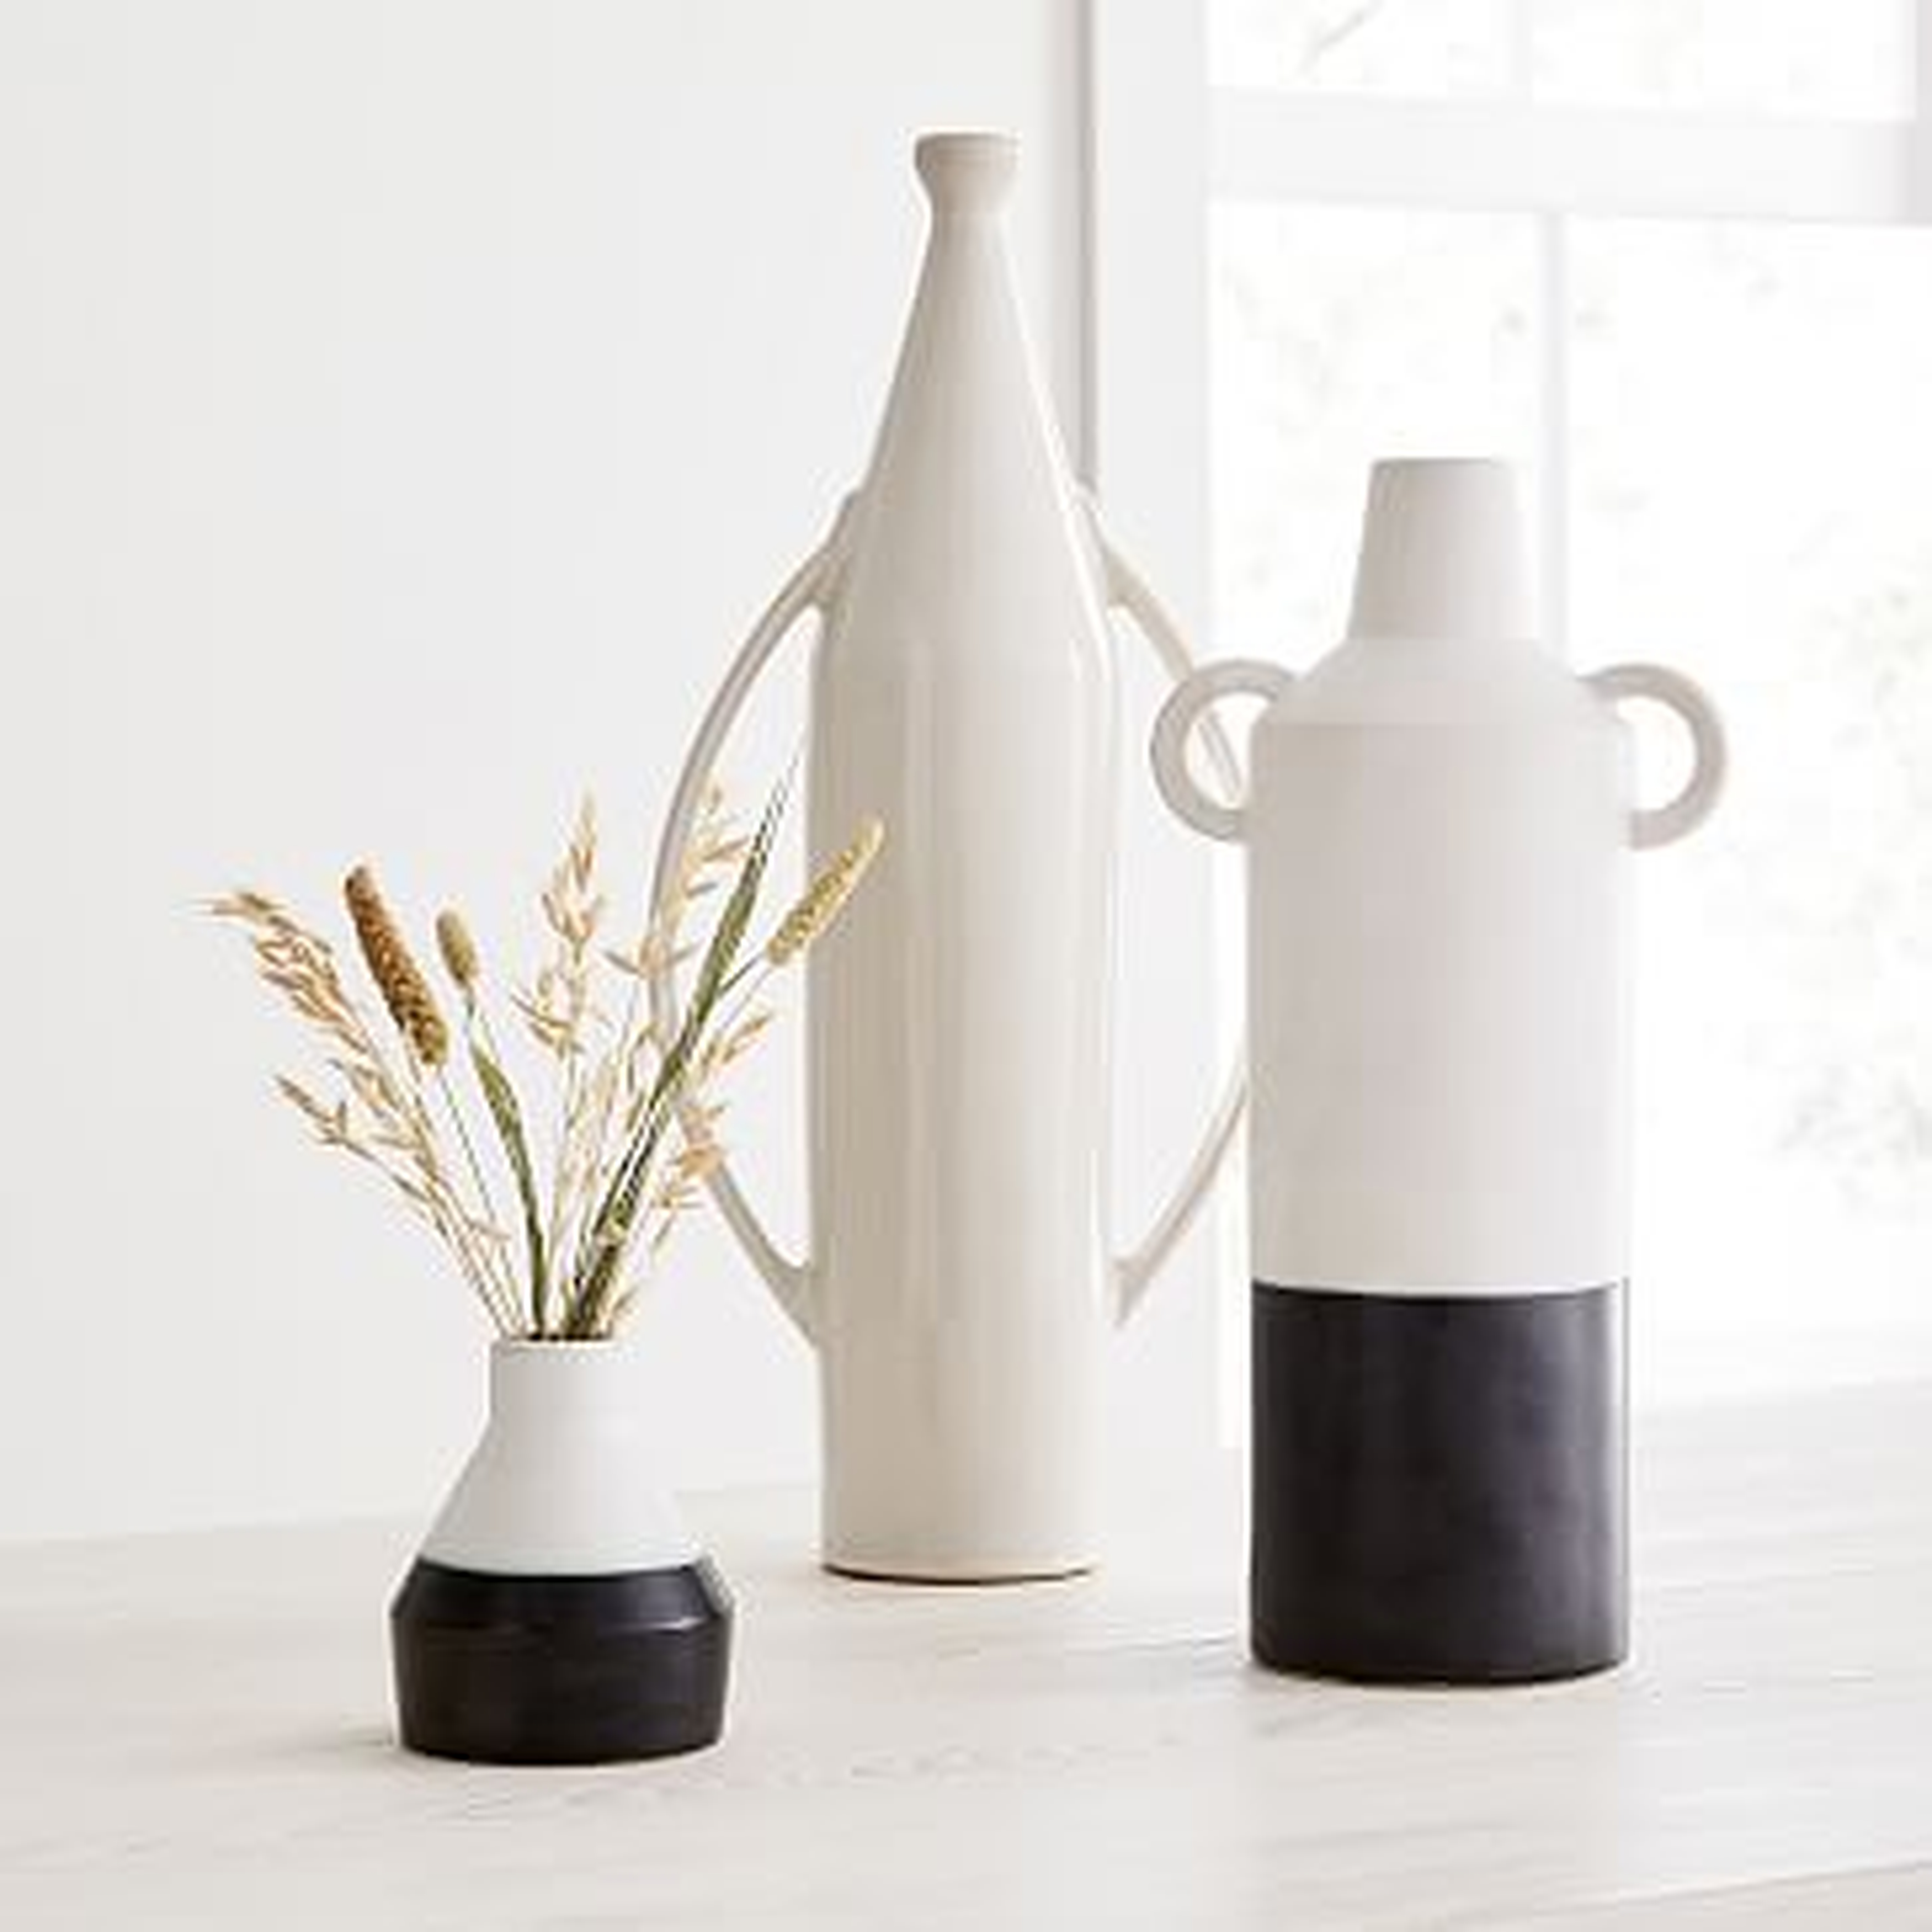 Shape Studies Vase, Jug, Tall Bottle, Bud Vase, Set of 3 - West Elm